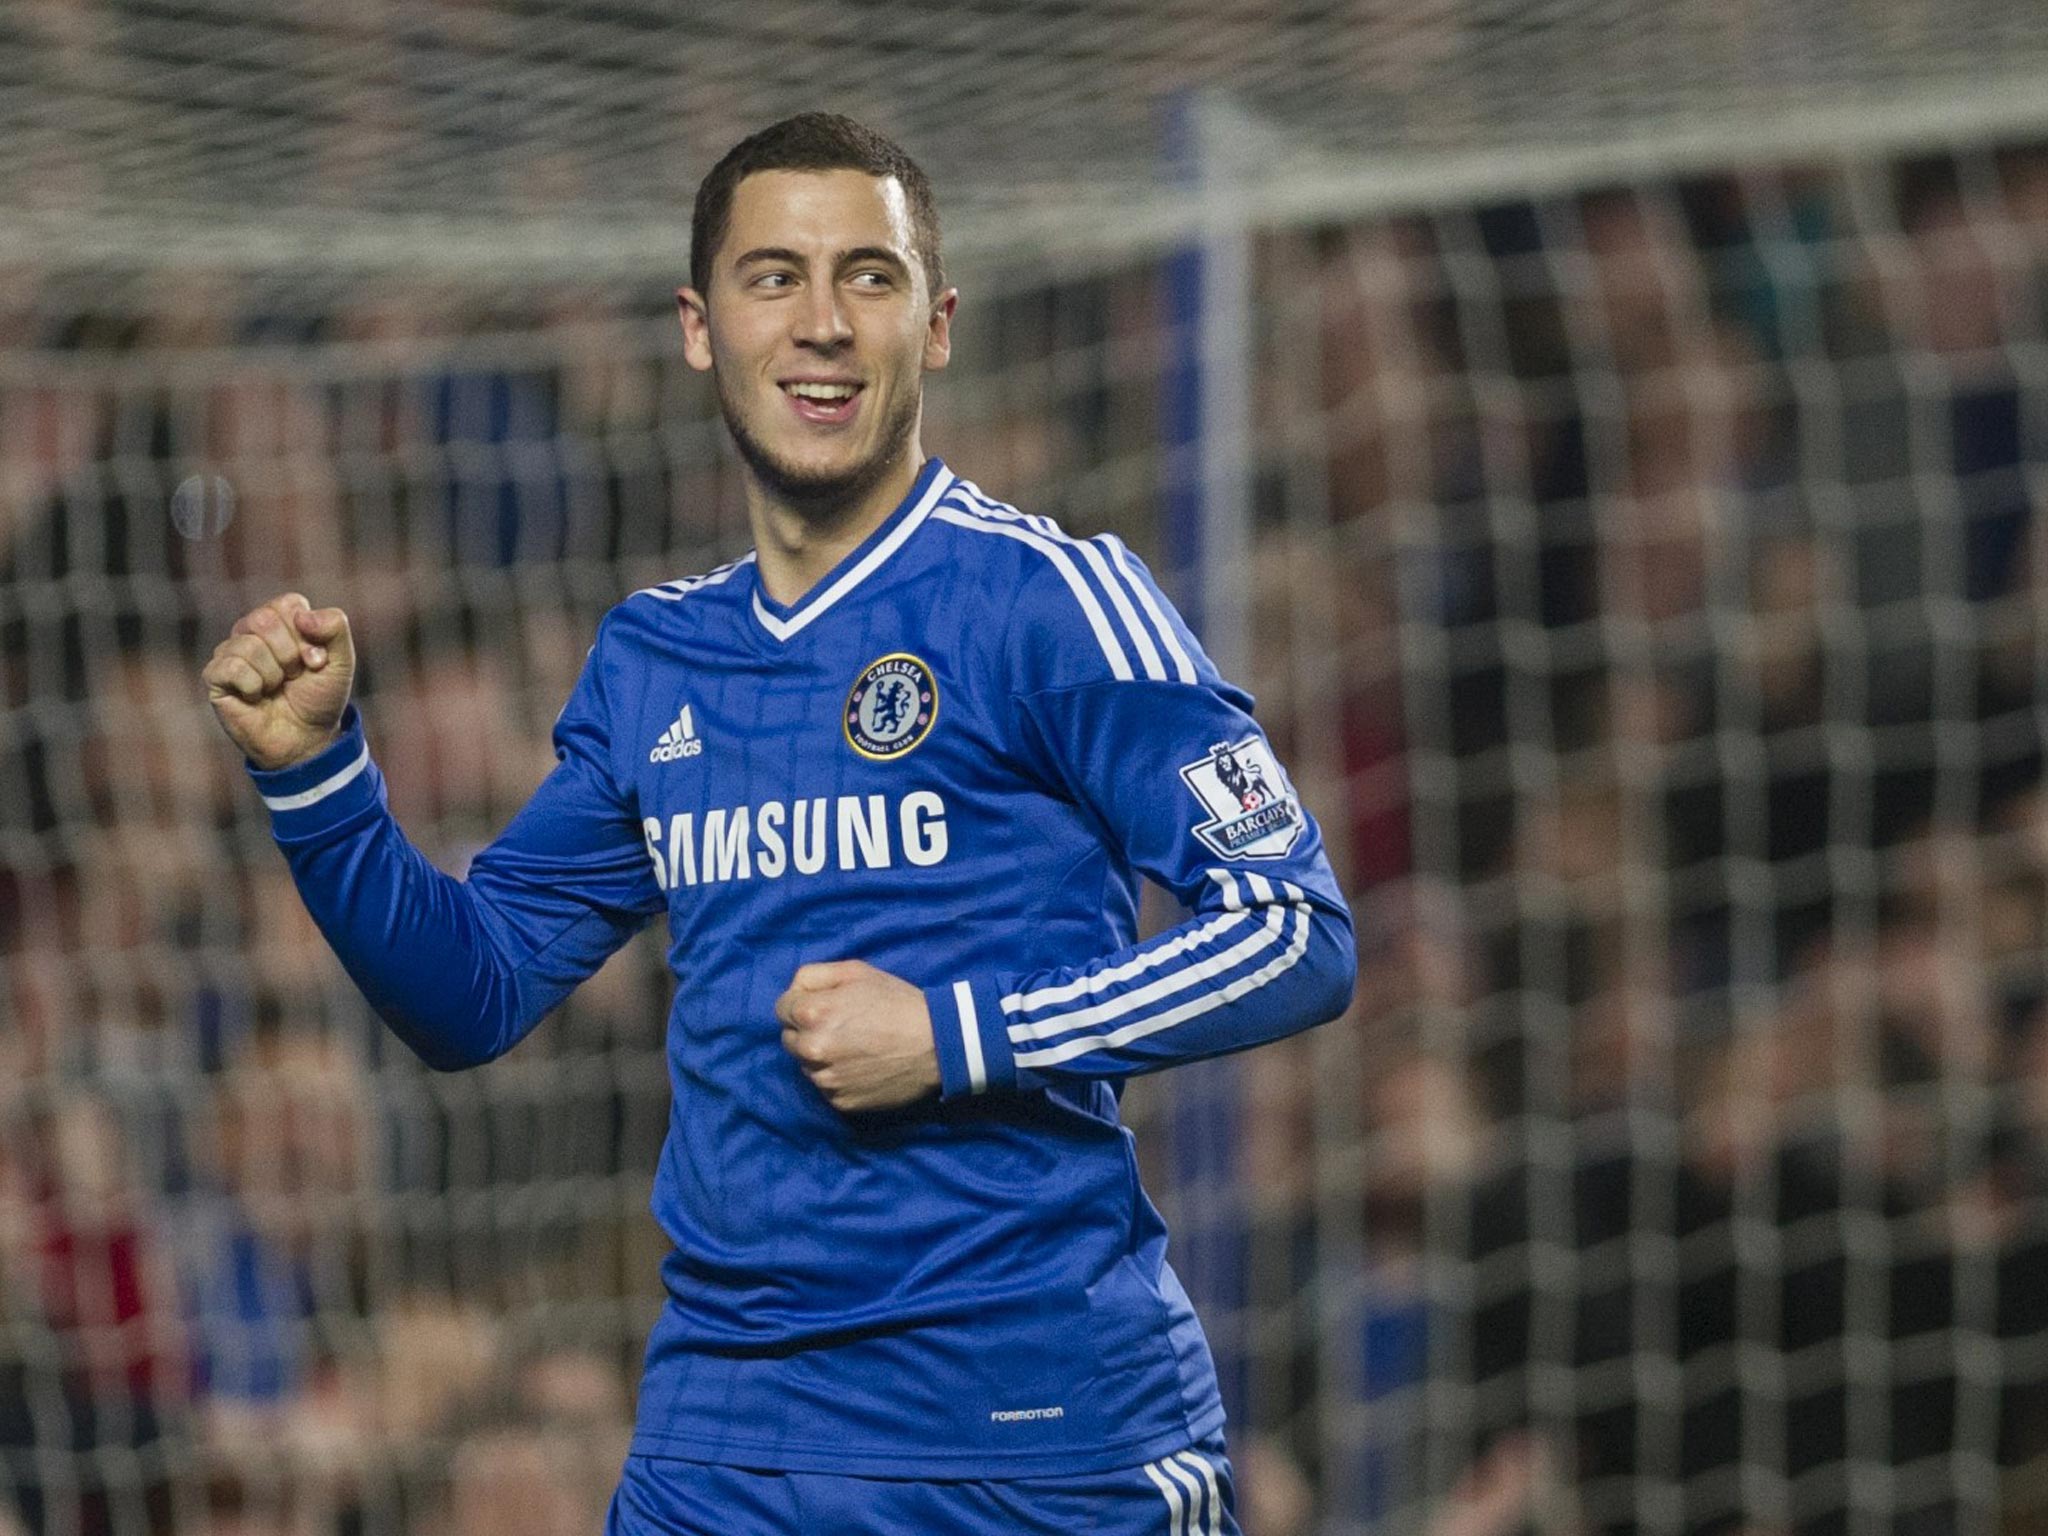 Eden Hazard cannot wait to wear the No 10 shirt for Chelsea next season